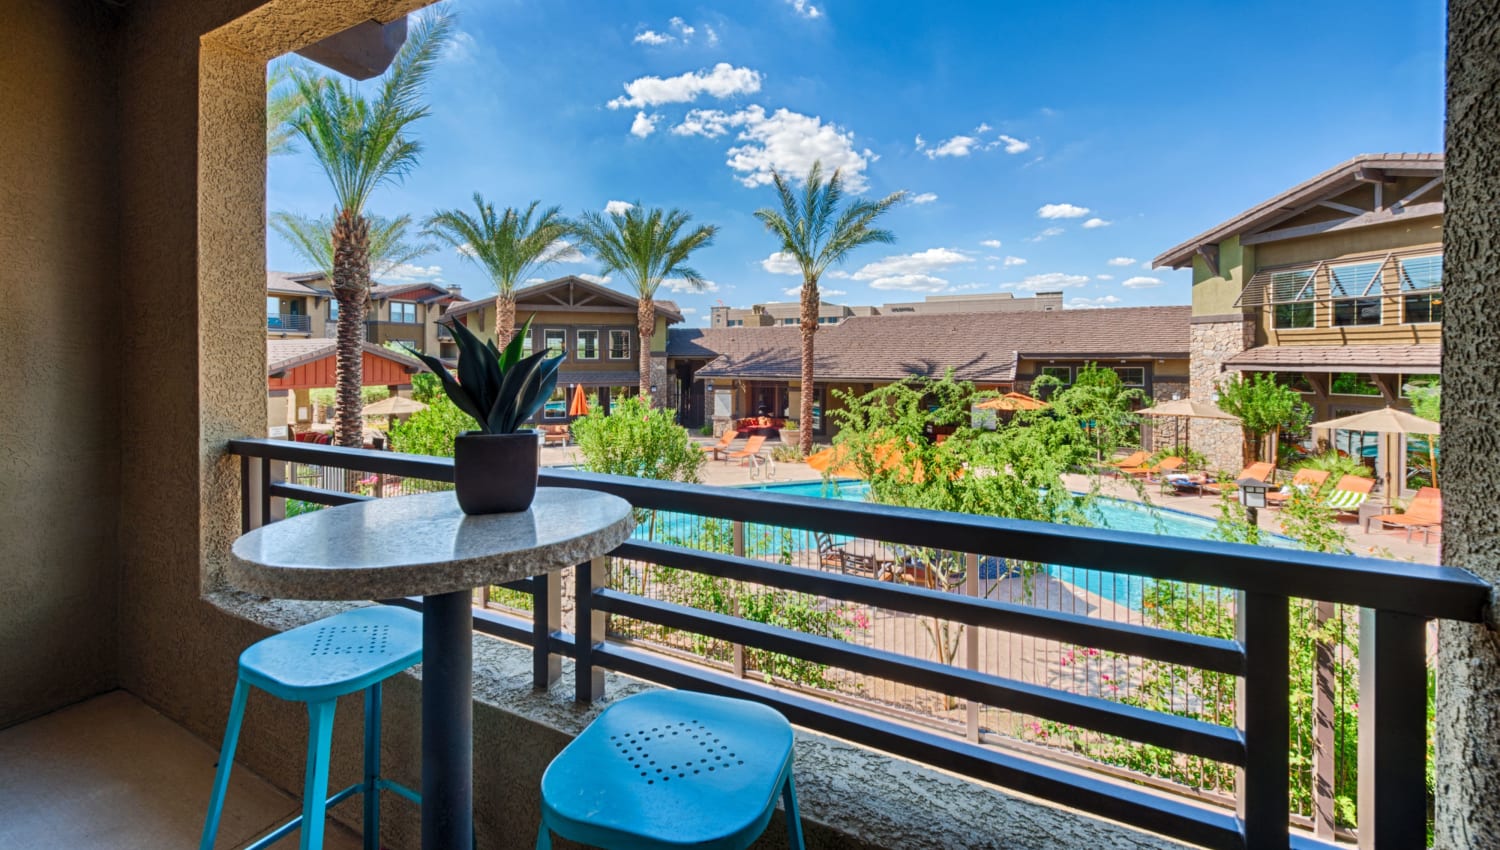 Private balcony at One North Scottsdale Apartments in Scottsdale, Arizona